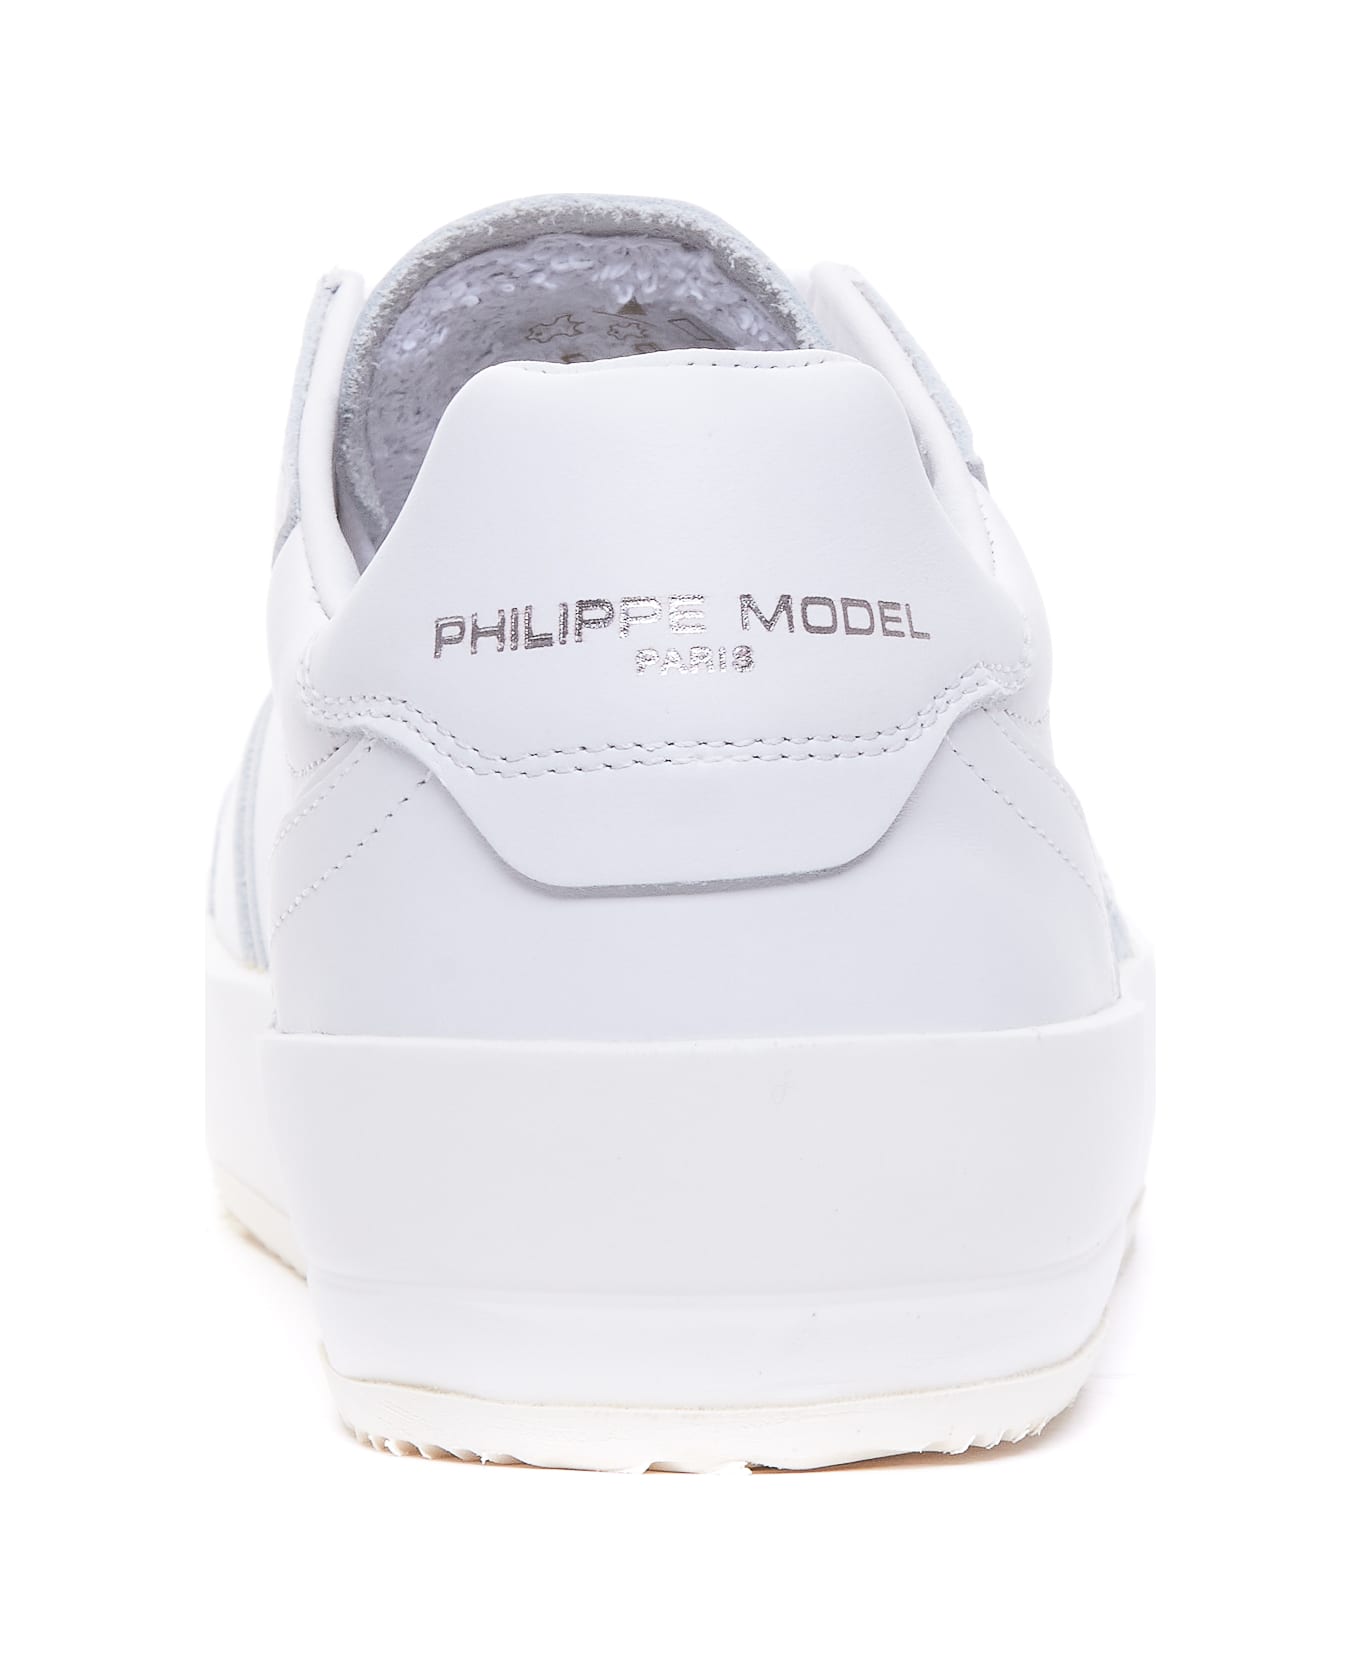 Philippe Model Nice Low Sneakers